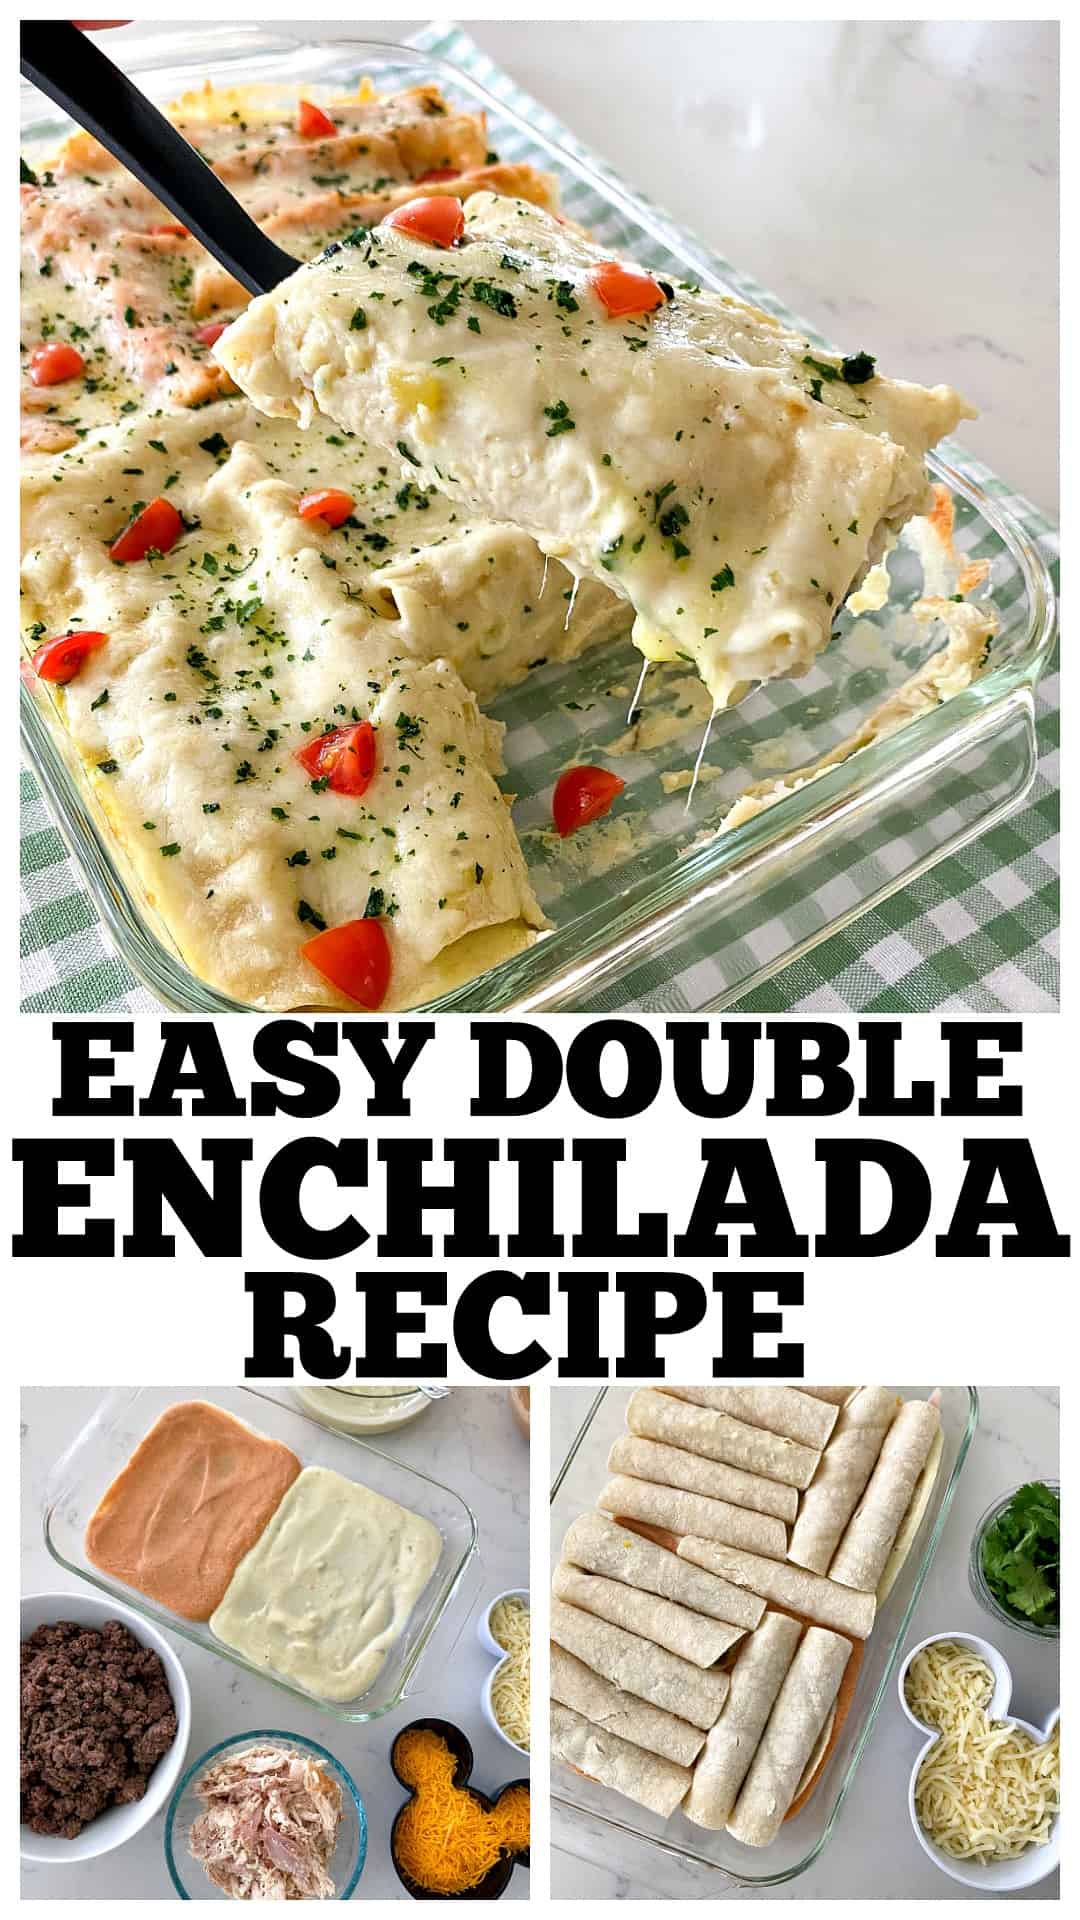 photo collage of enchilada recipe